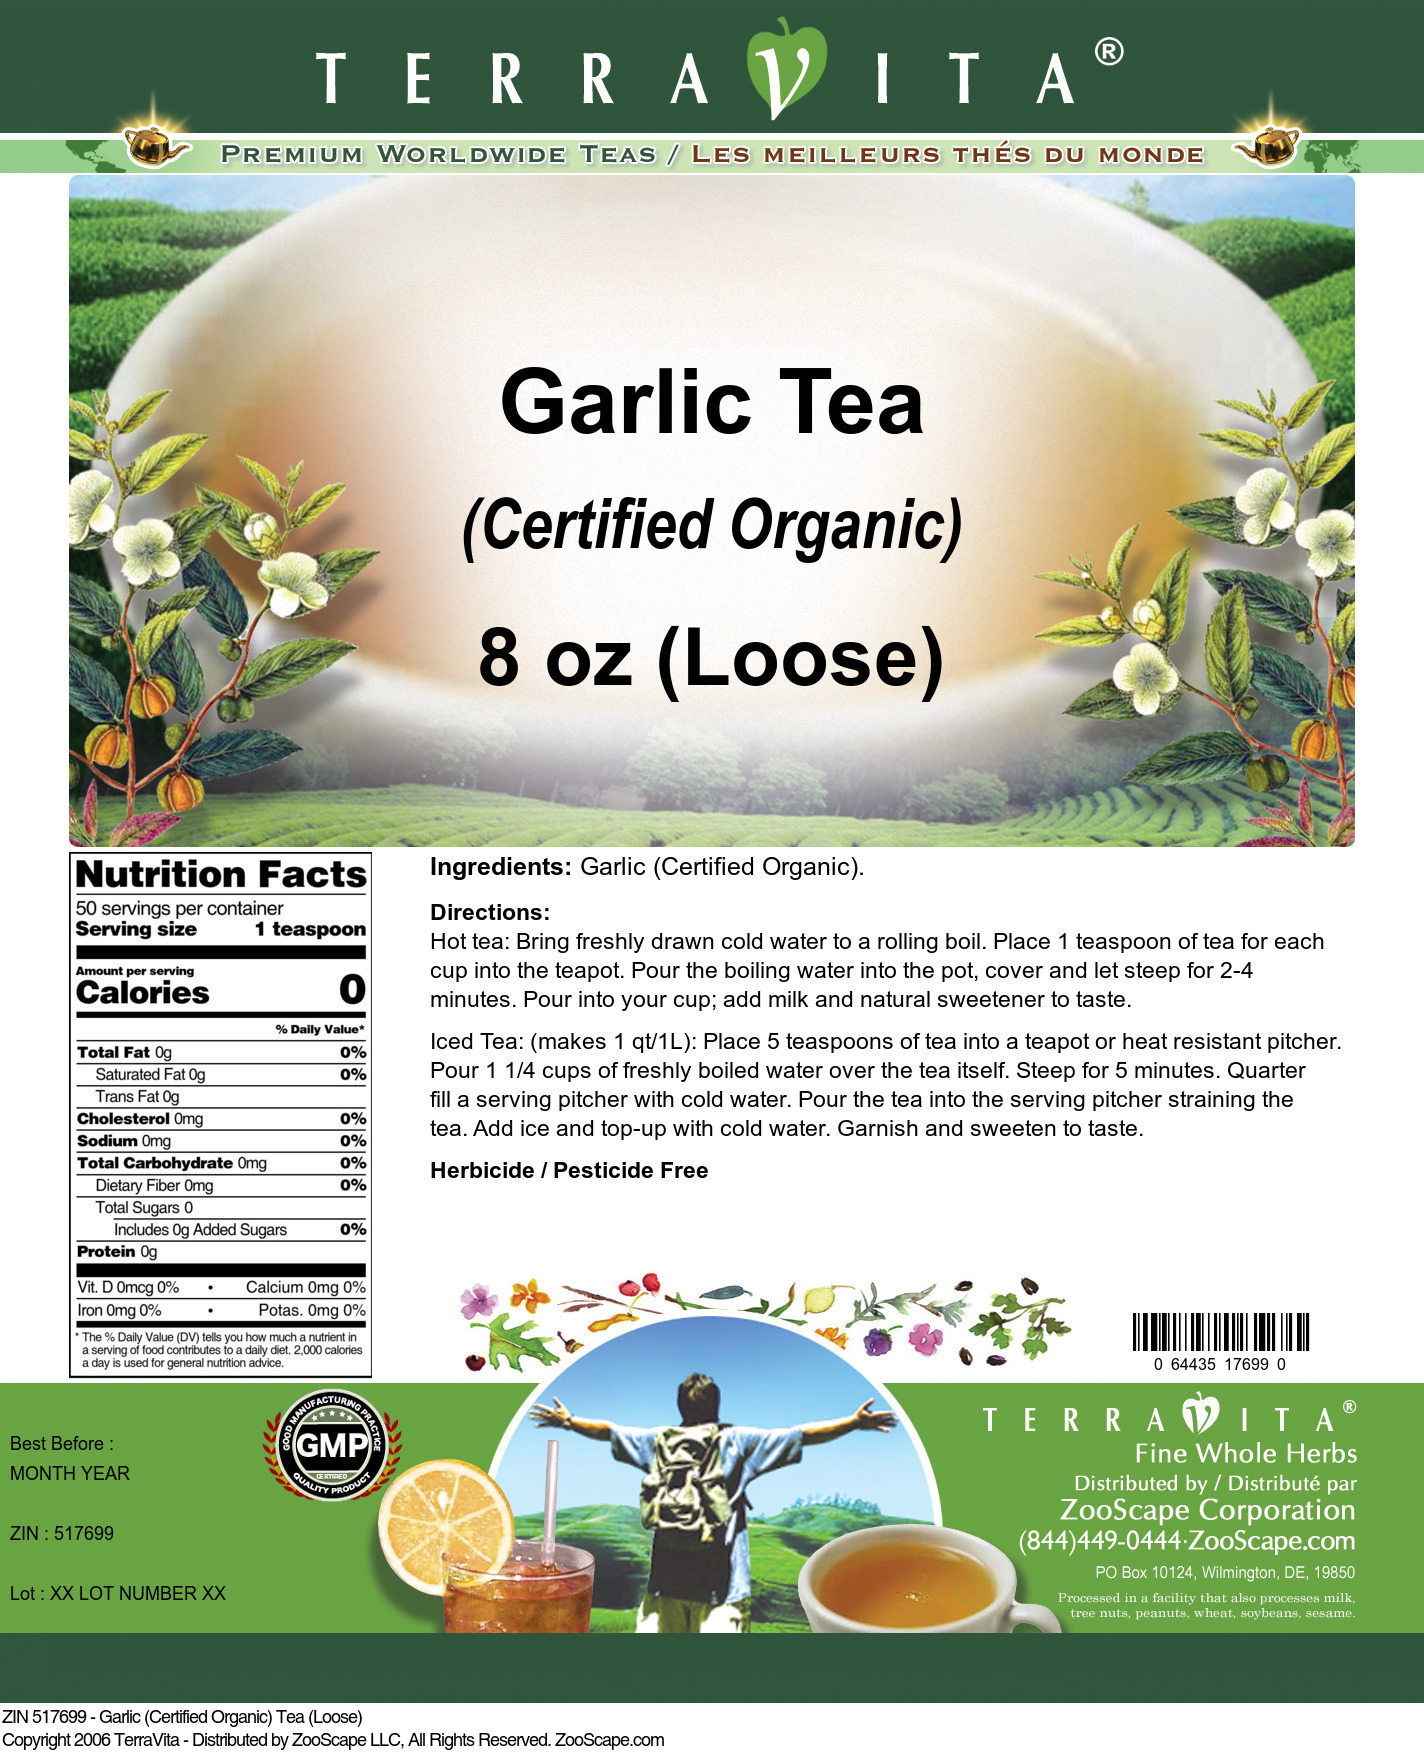 Garlic (Certified Organic) Tea (Loose) - Label